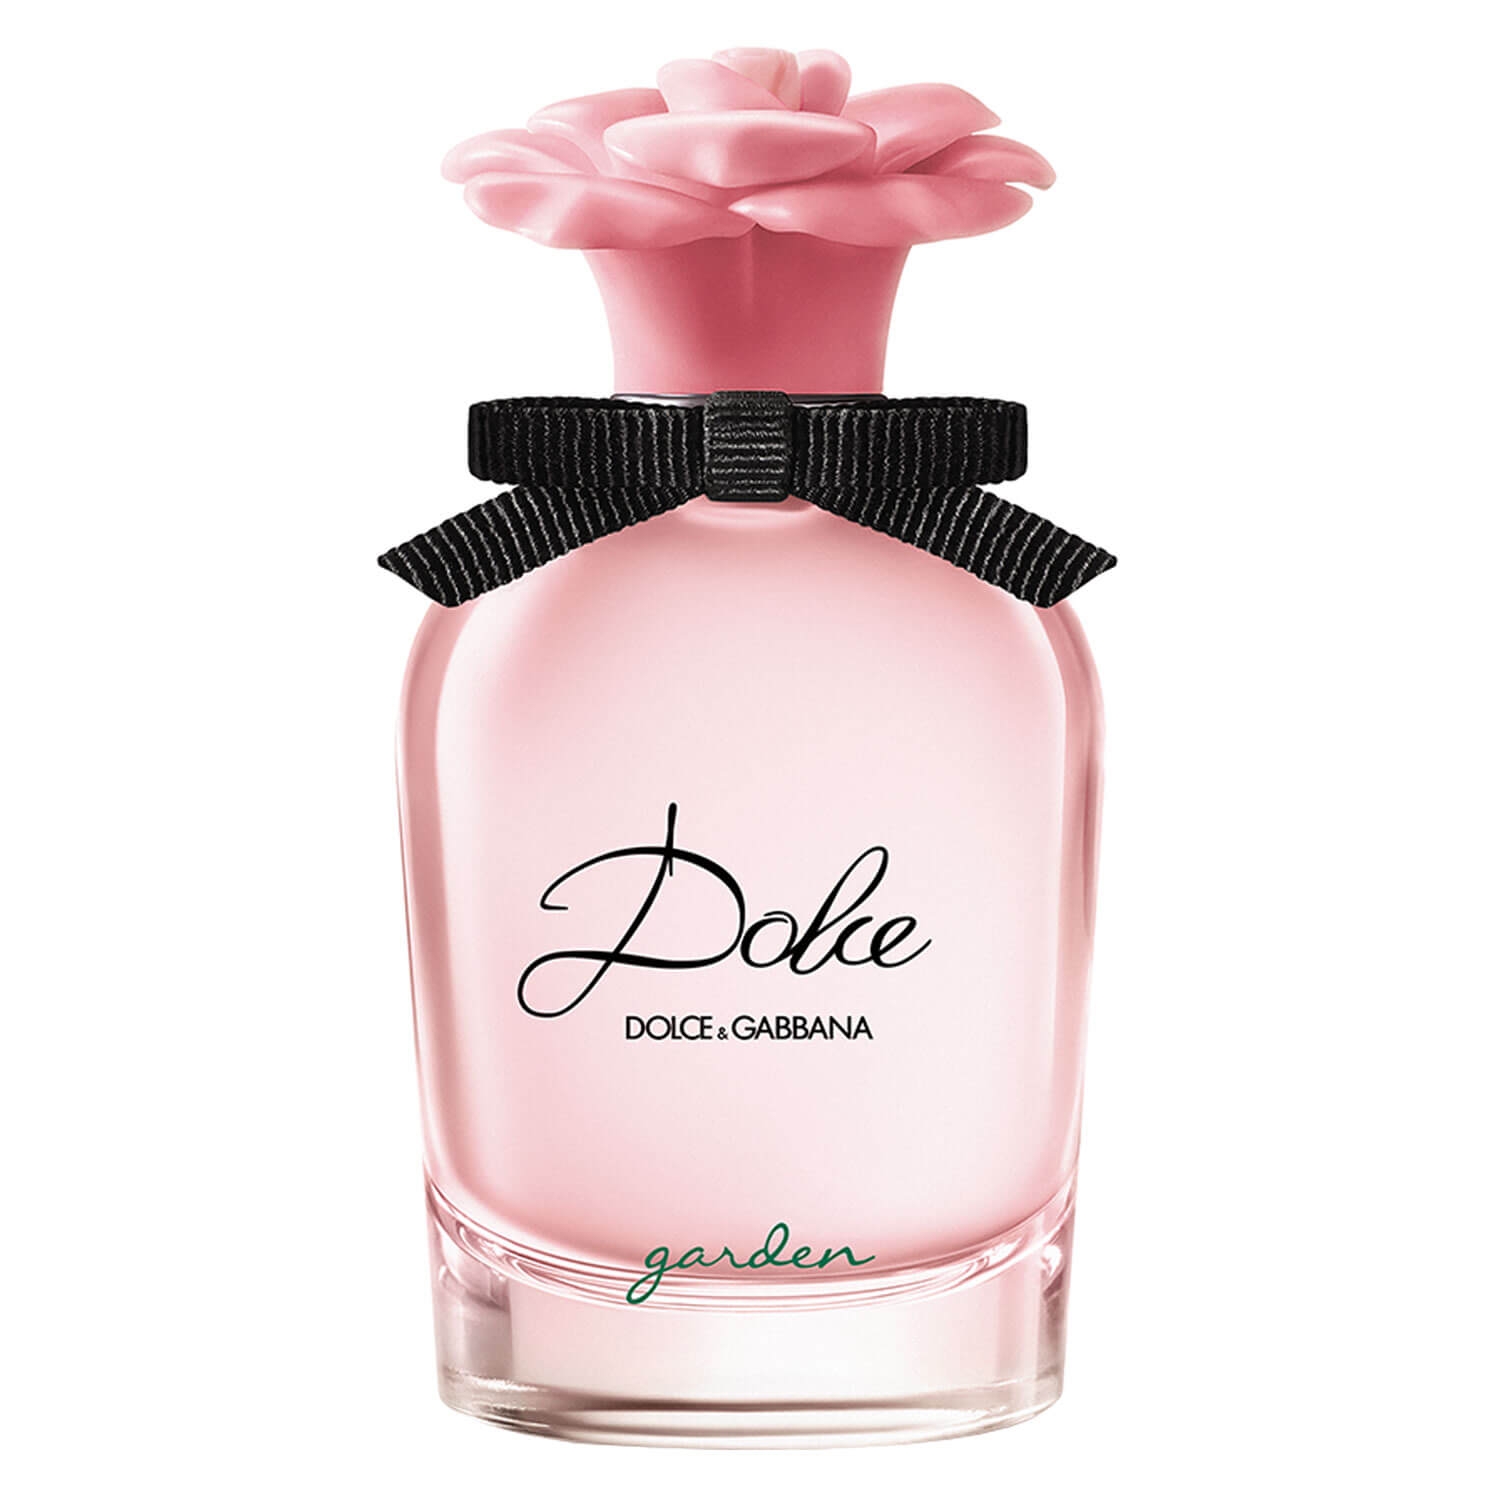 Produktbild von D&G Dolce - Garden Eau de Parfum